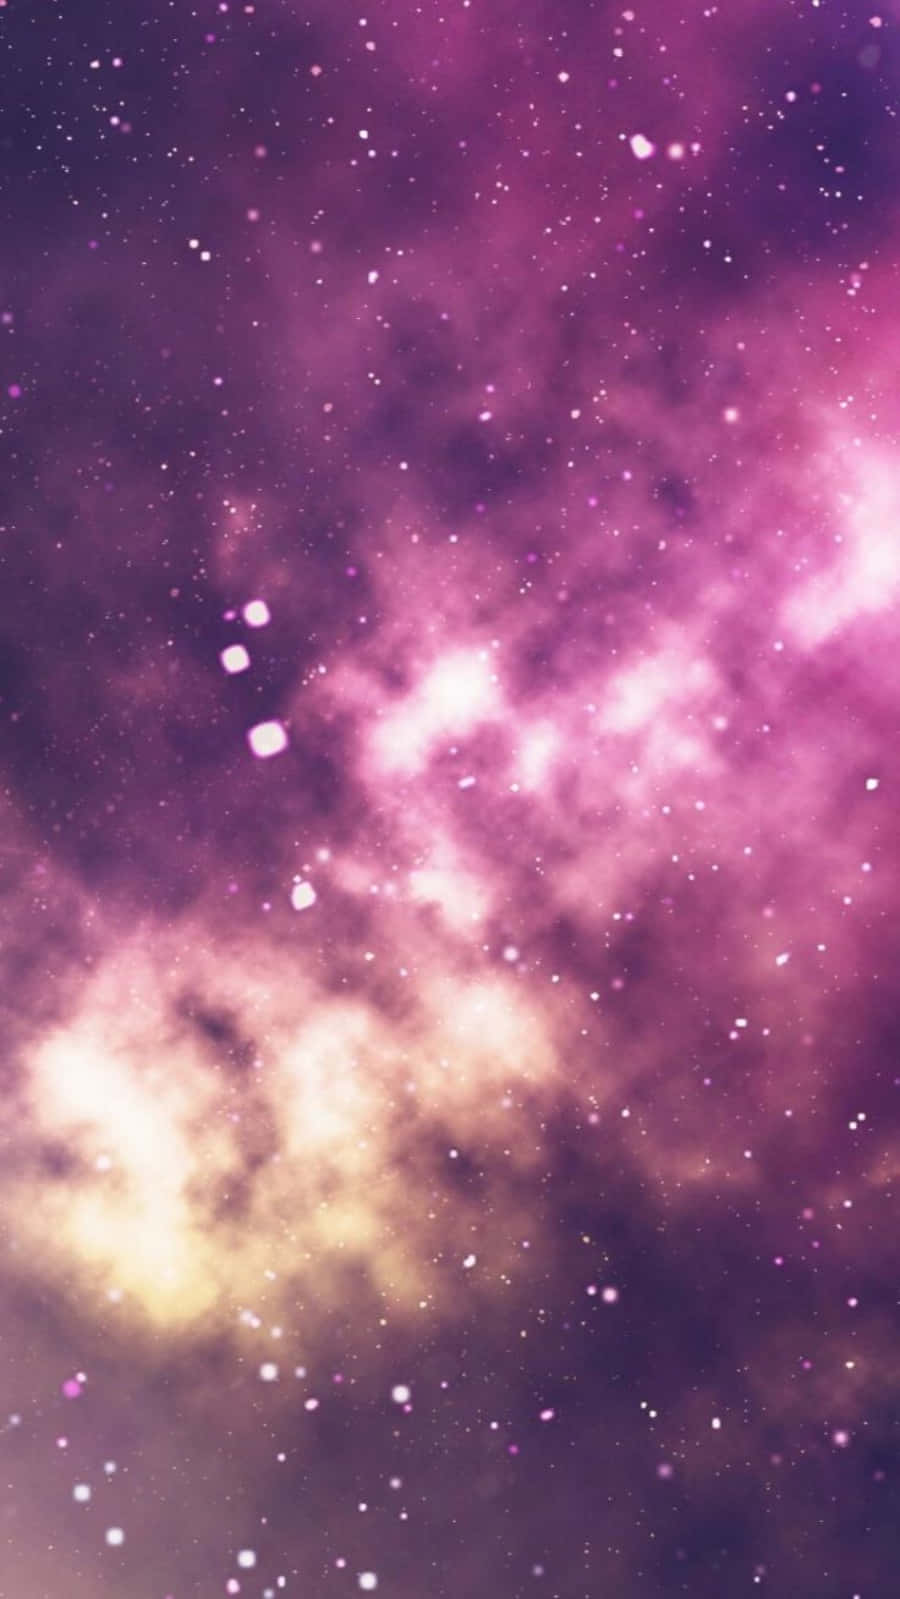 Aesthetic Pink And Purple Galaxy Digital Artwork Wallpaper